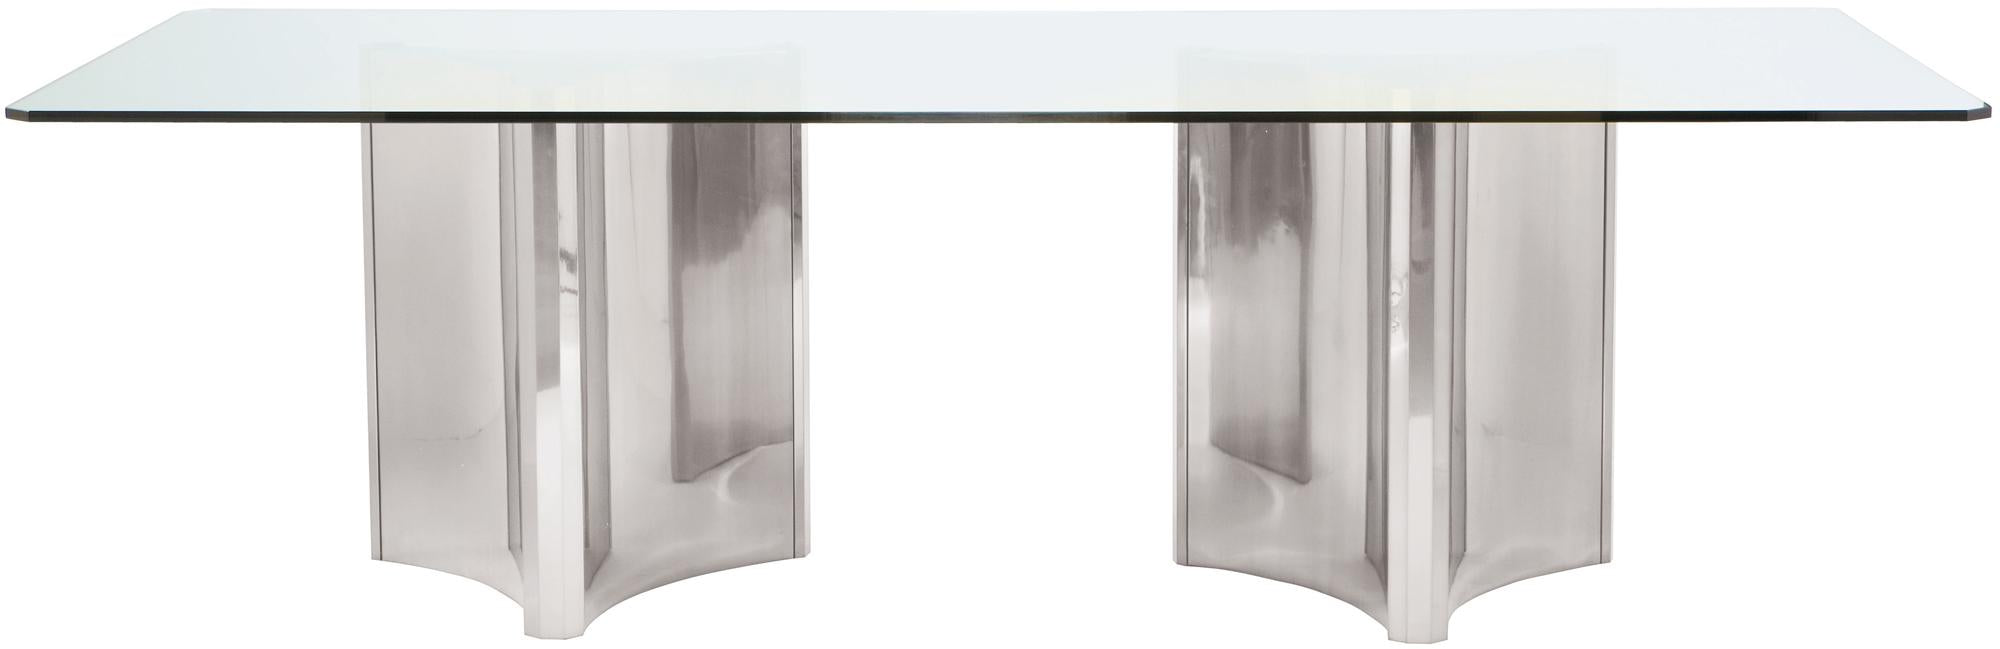 Bernhardt Interiors Abbott Metal Dining Table in Stainless Steel image